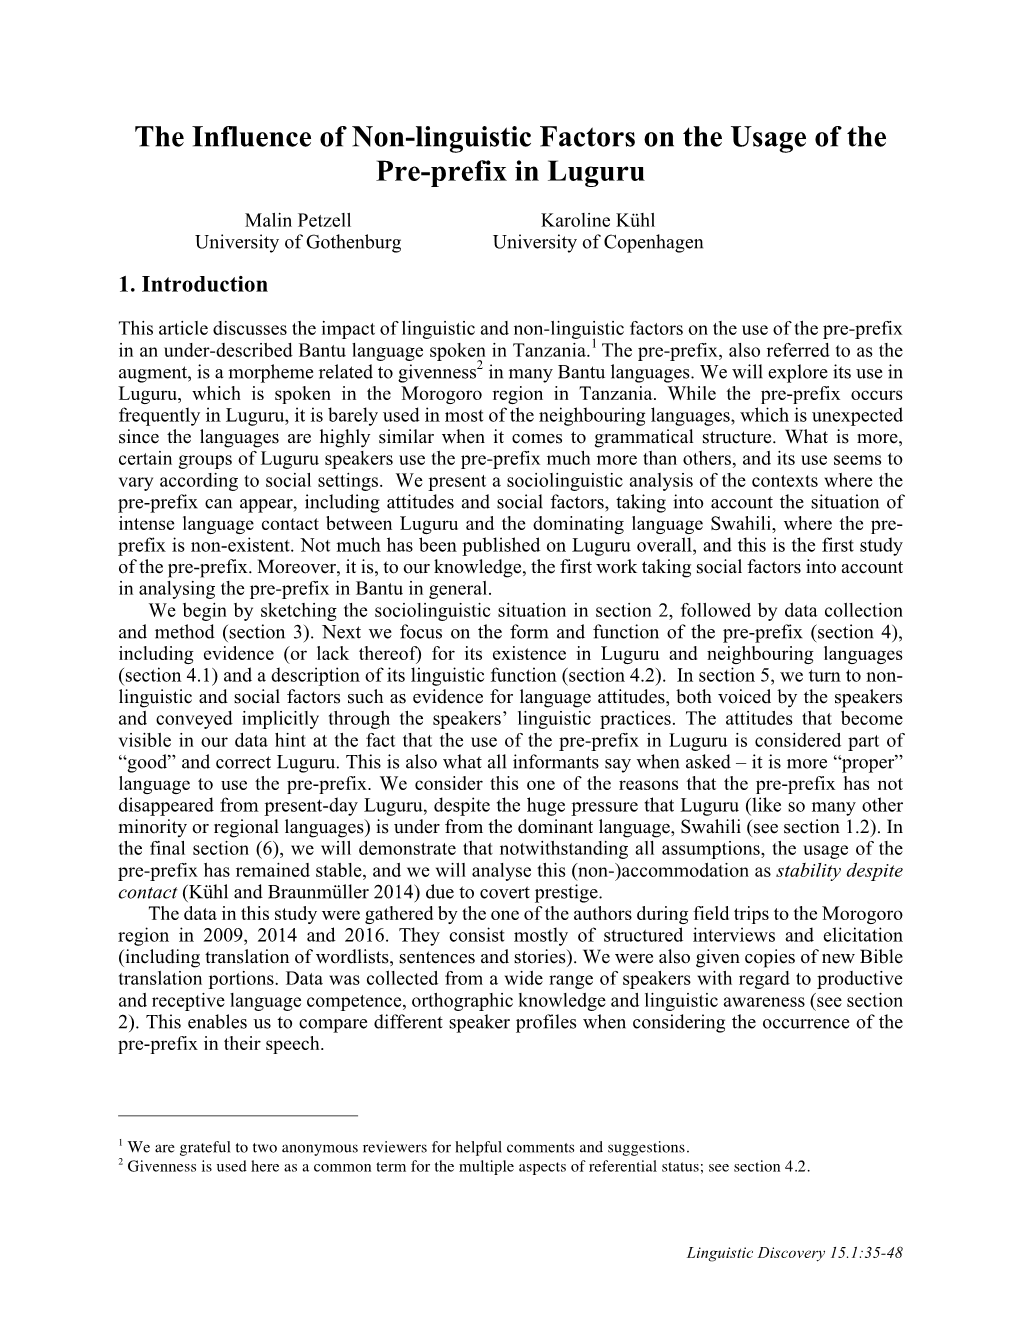 The Influence of Non-Linguistic Factors on the Usage of the Pre-Prefix in Luguru